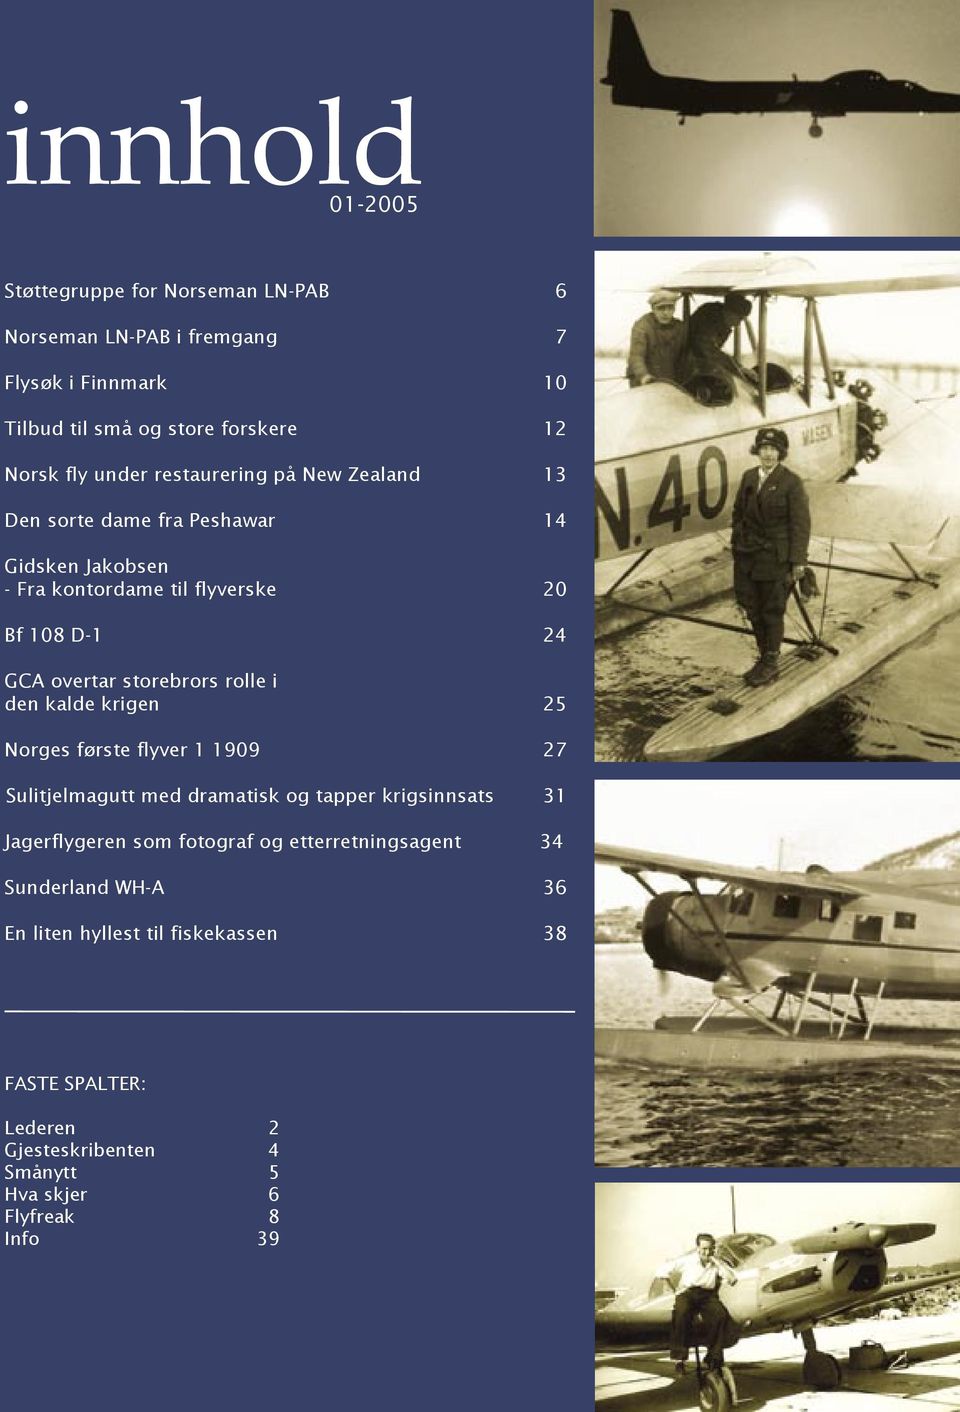 rolle i den kalde krigen 25 Norges første flyver 1 1909 27 Sulitjelmagutt med dramatisk og tapper krigsinnsats 31 Jagerflygeren som fotograf og